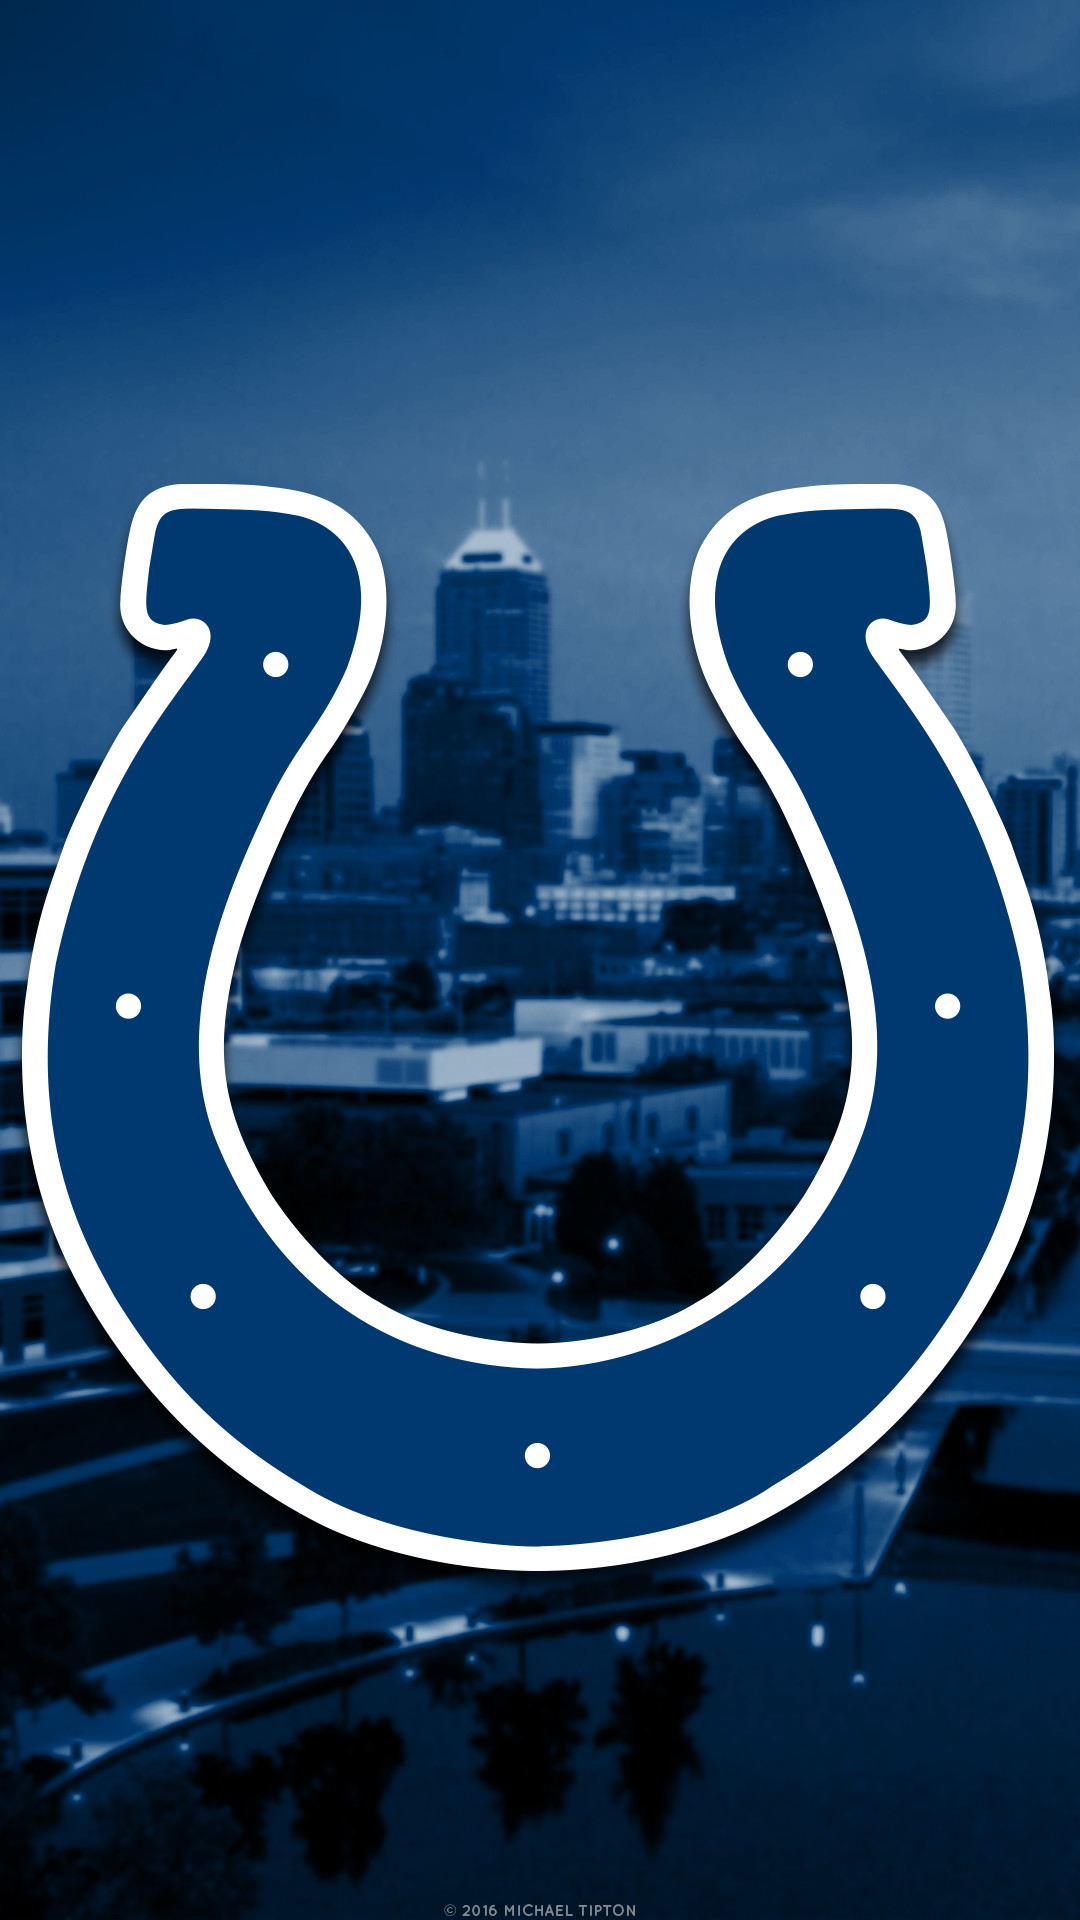 1080x1920 Indianapolis Colts iPhone Wallpaper - WallpaperSafari